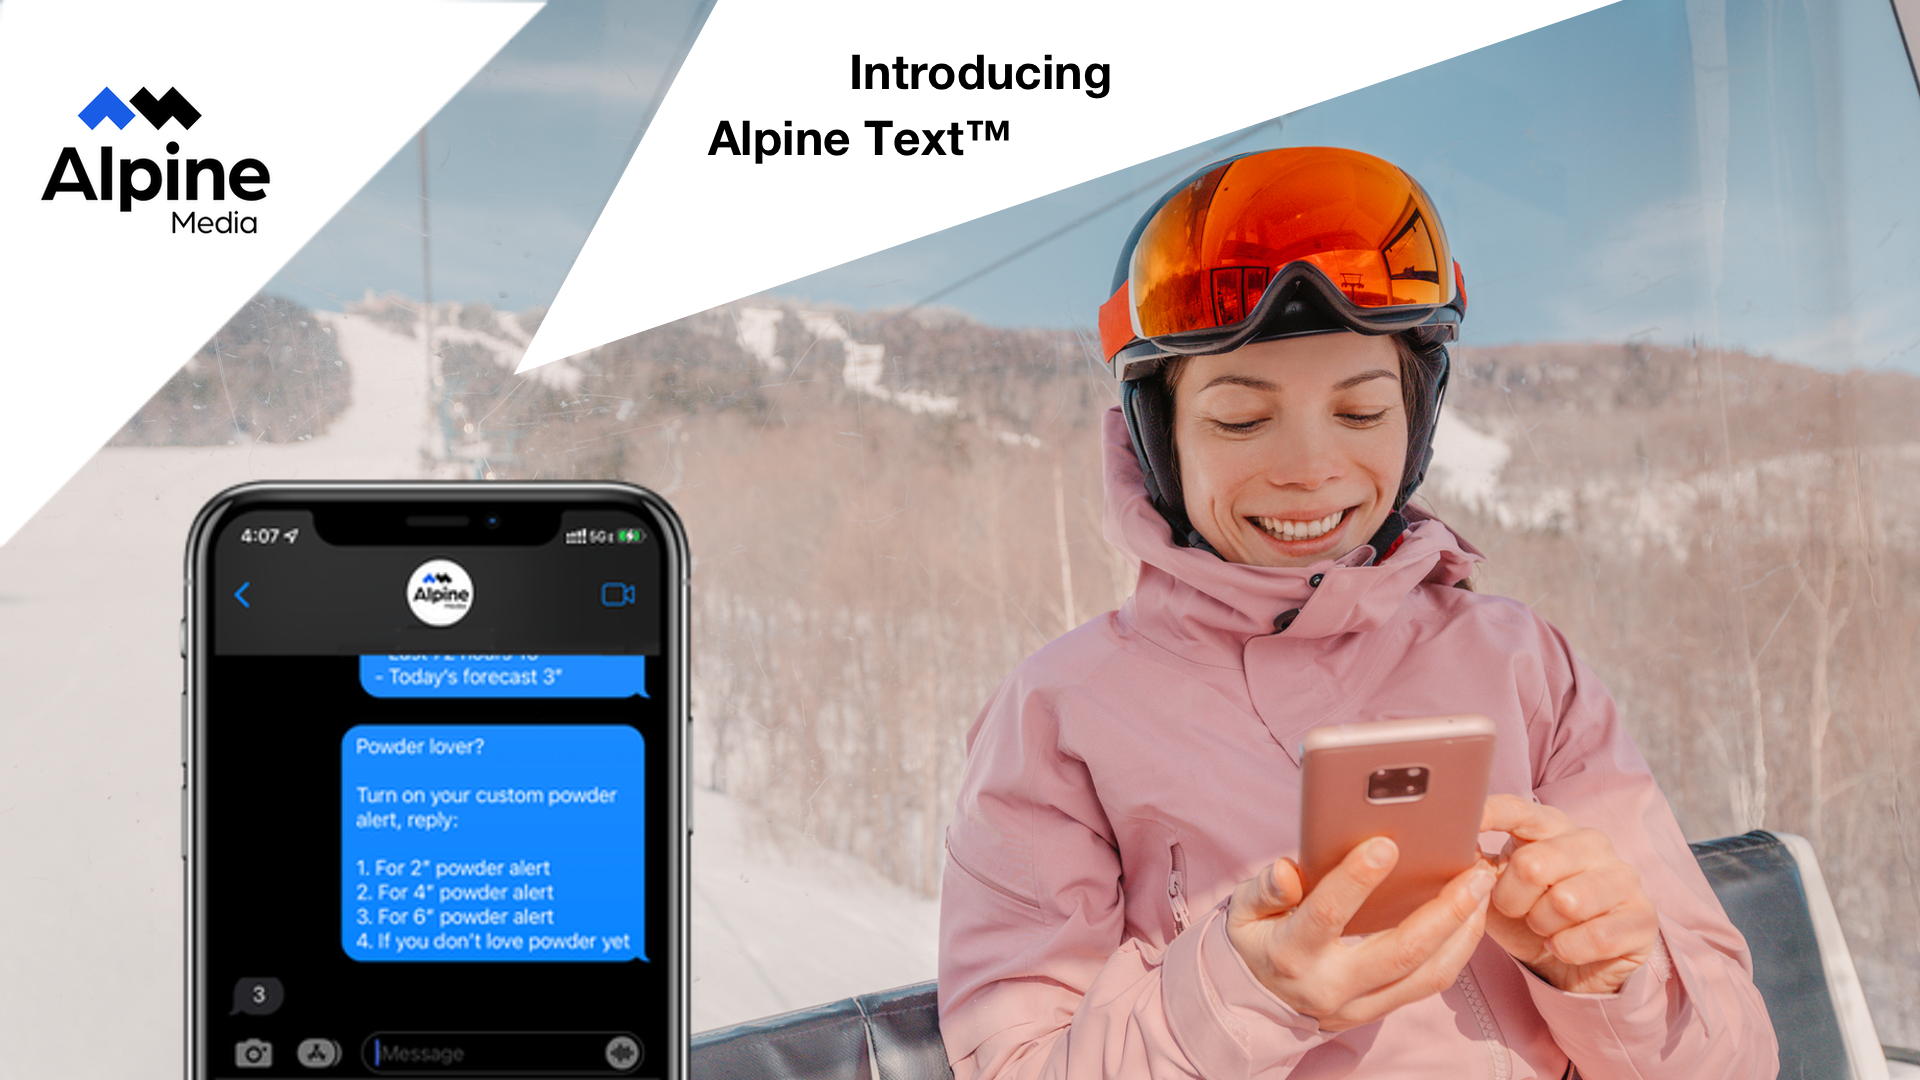 Alpine Media launches Alpine Text™